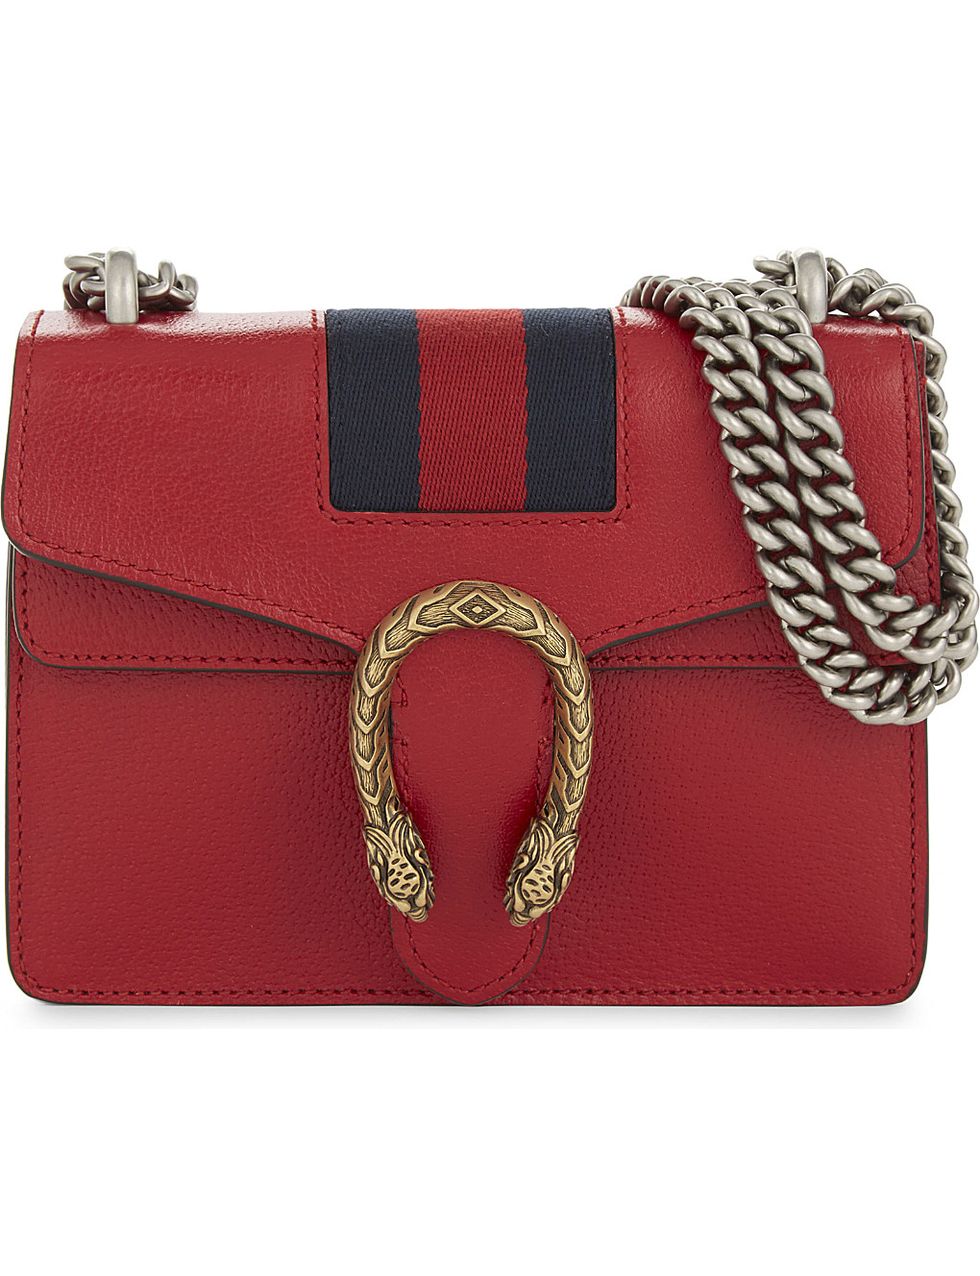 Handbag, Bag, Red, Fashion accessory, Leather, Shoulder bag, Material property, Coin purse, Wallet, Wristlet, 